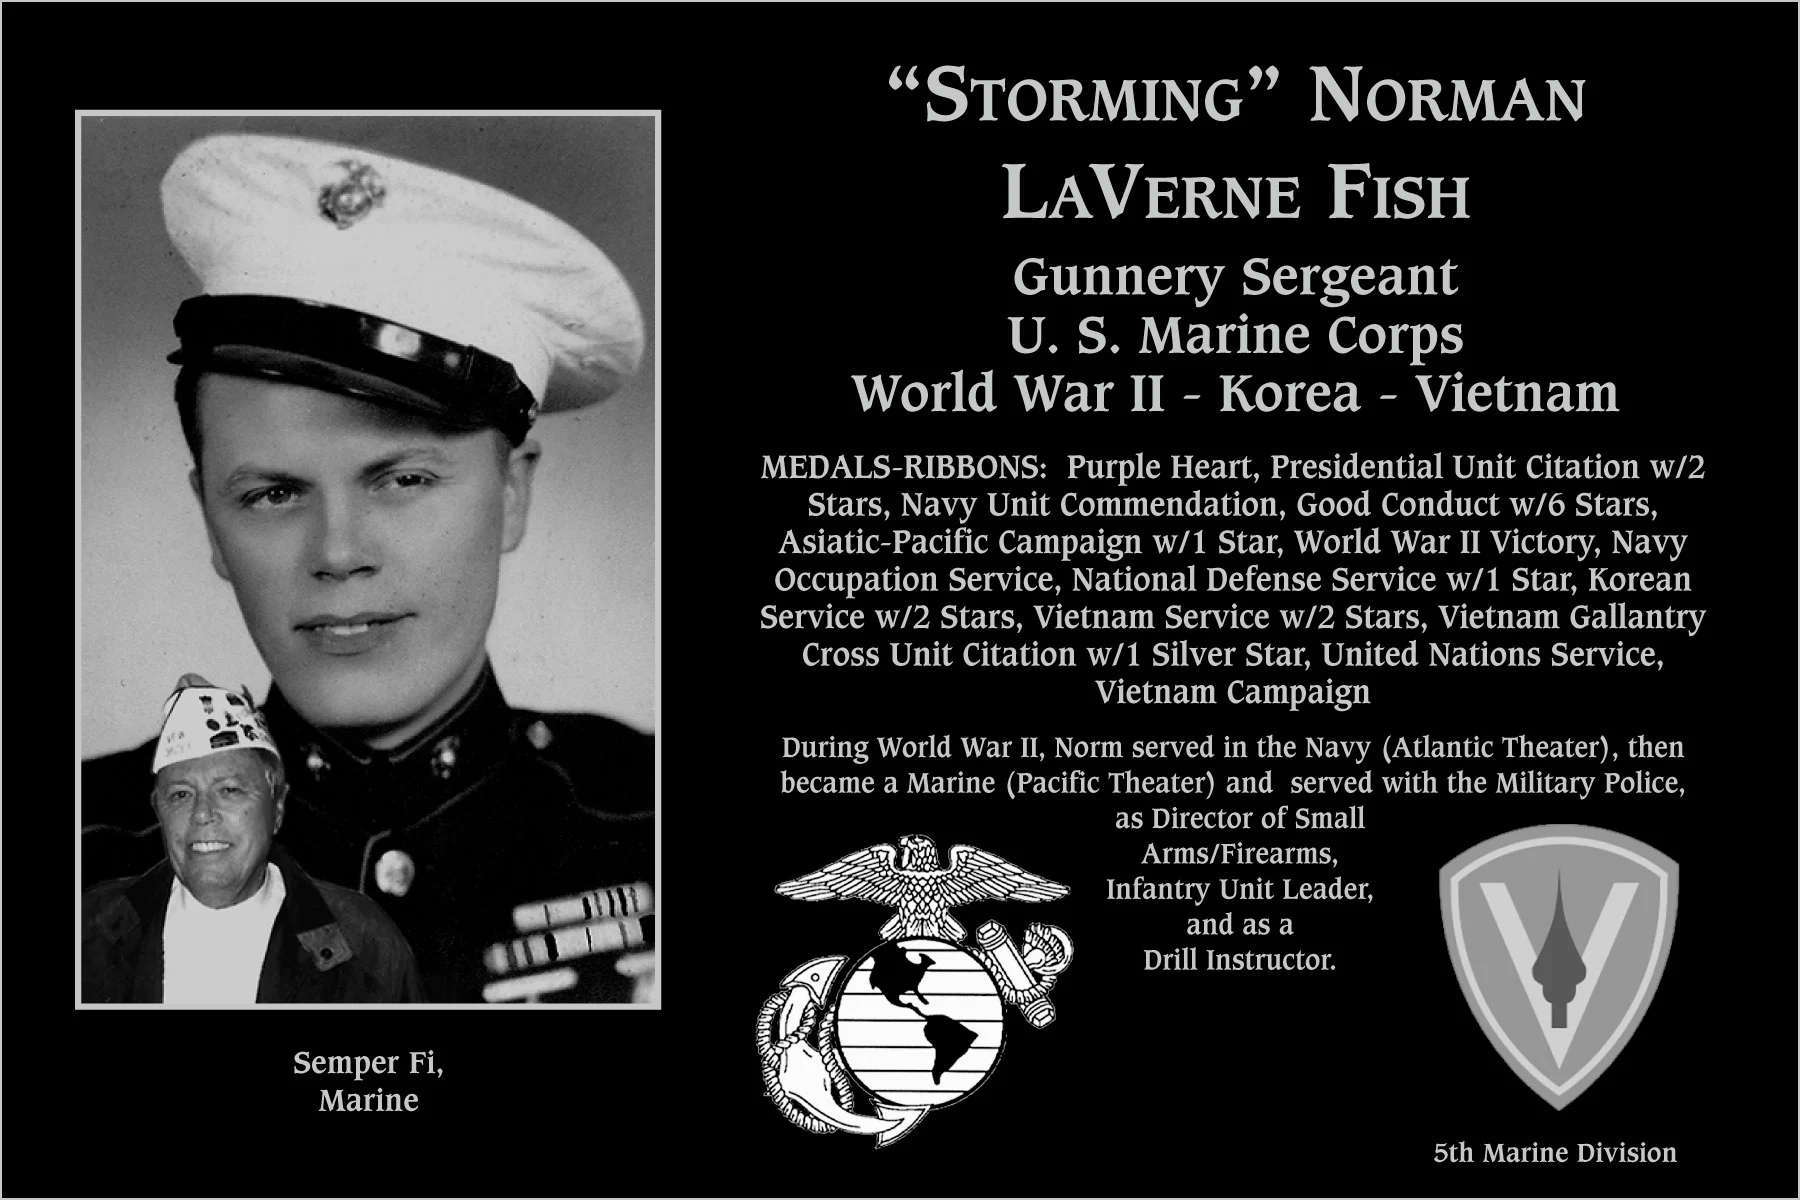 Norman LaVerne Fish